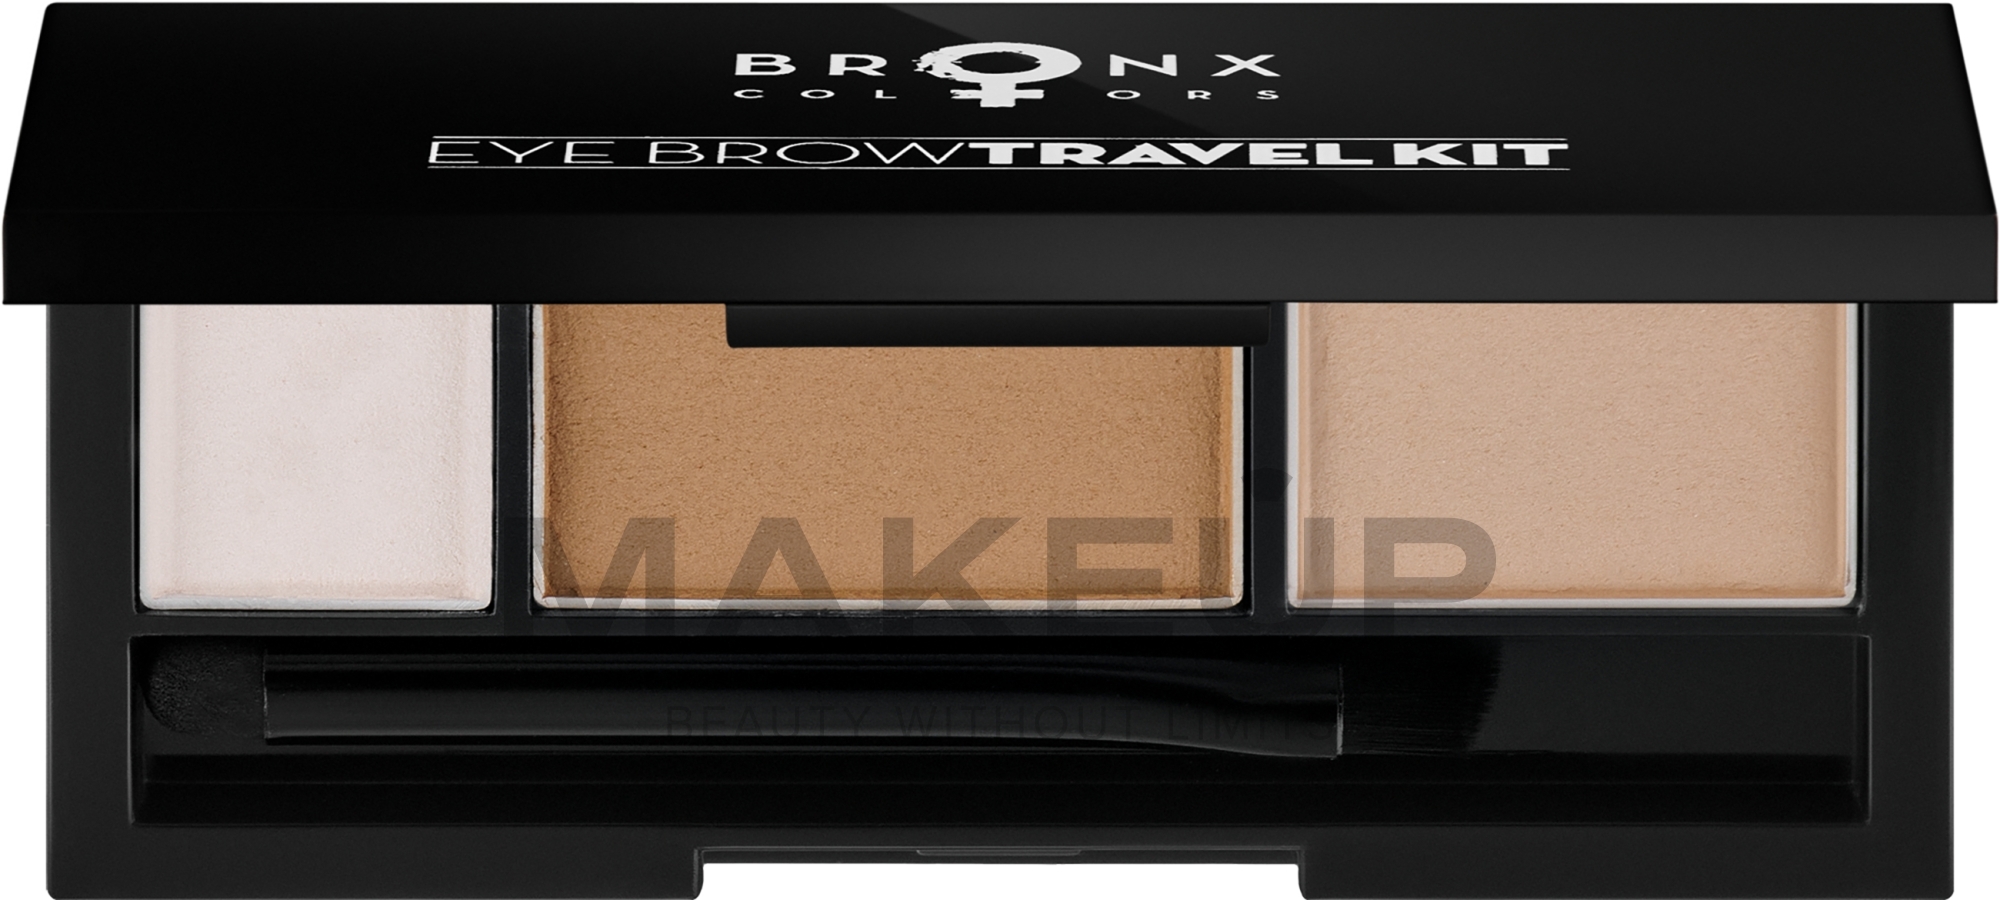 Набор для бровей - Bronx Colors Eye Brow Travel Kit — фото EBTK01